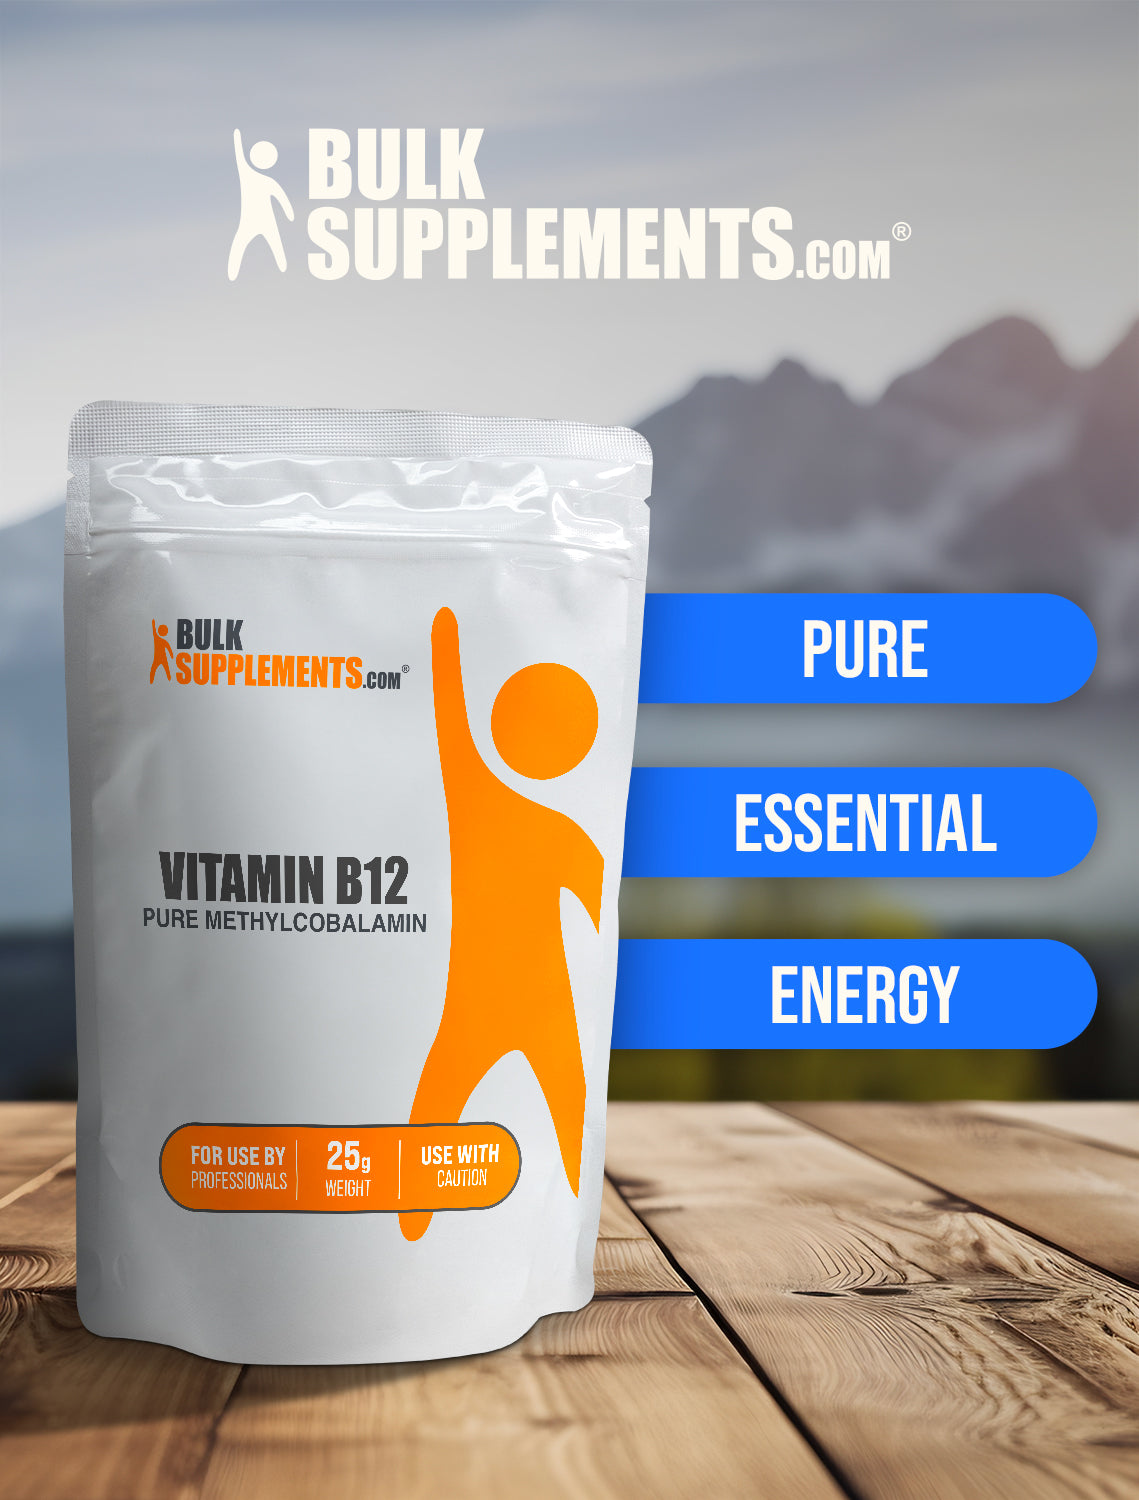 Vitamin B12 Pure Methylcobalamin powder keyword image 25g